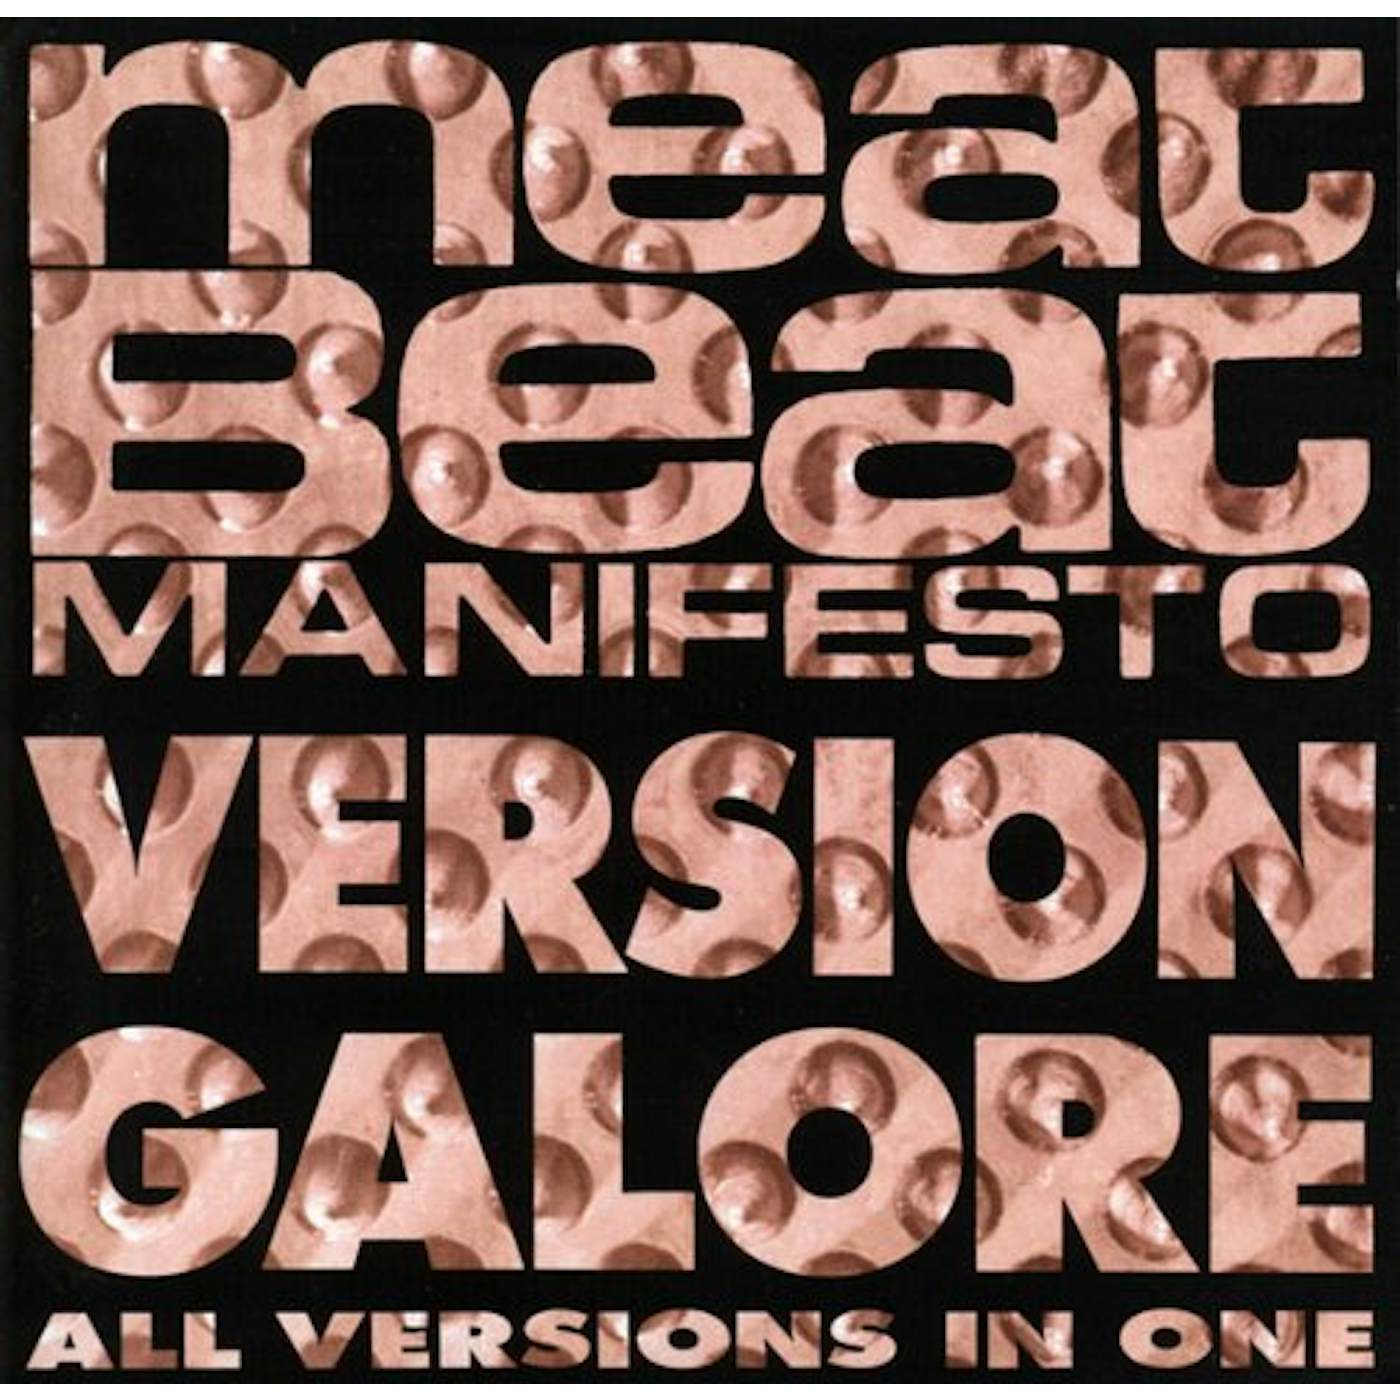 Meat Beat Manifesto Version Galore Vinyl Record